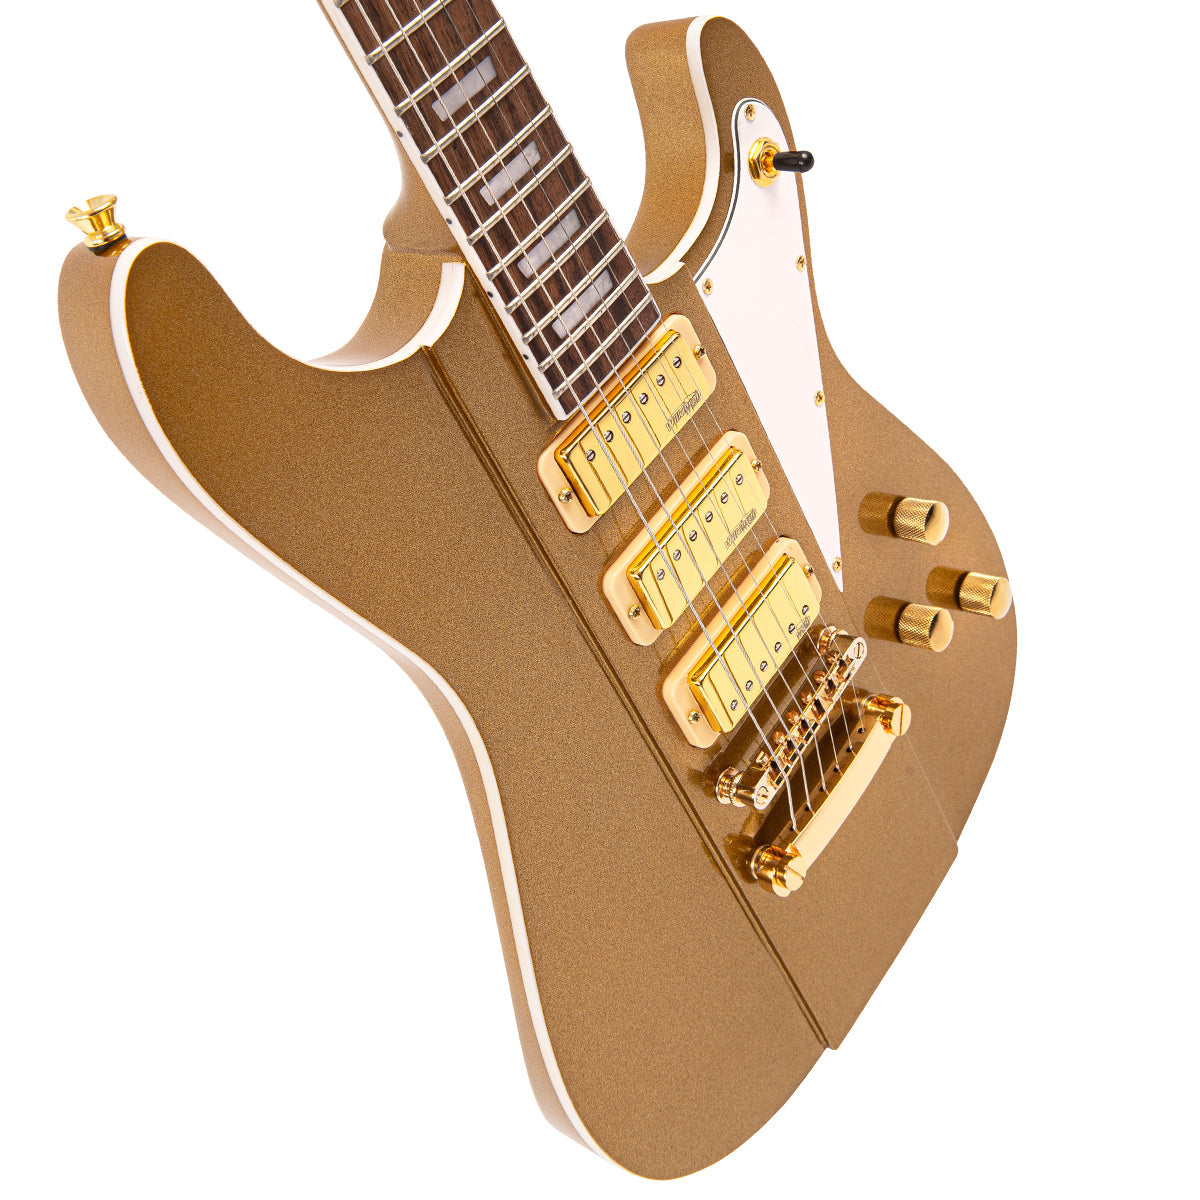 Joe Doe 'Gas Jockey' Electric Guitar by Vintage ~ Sparkling Gold